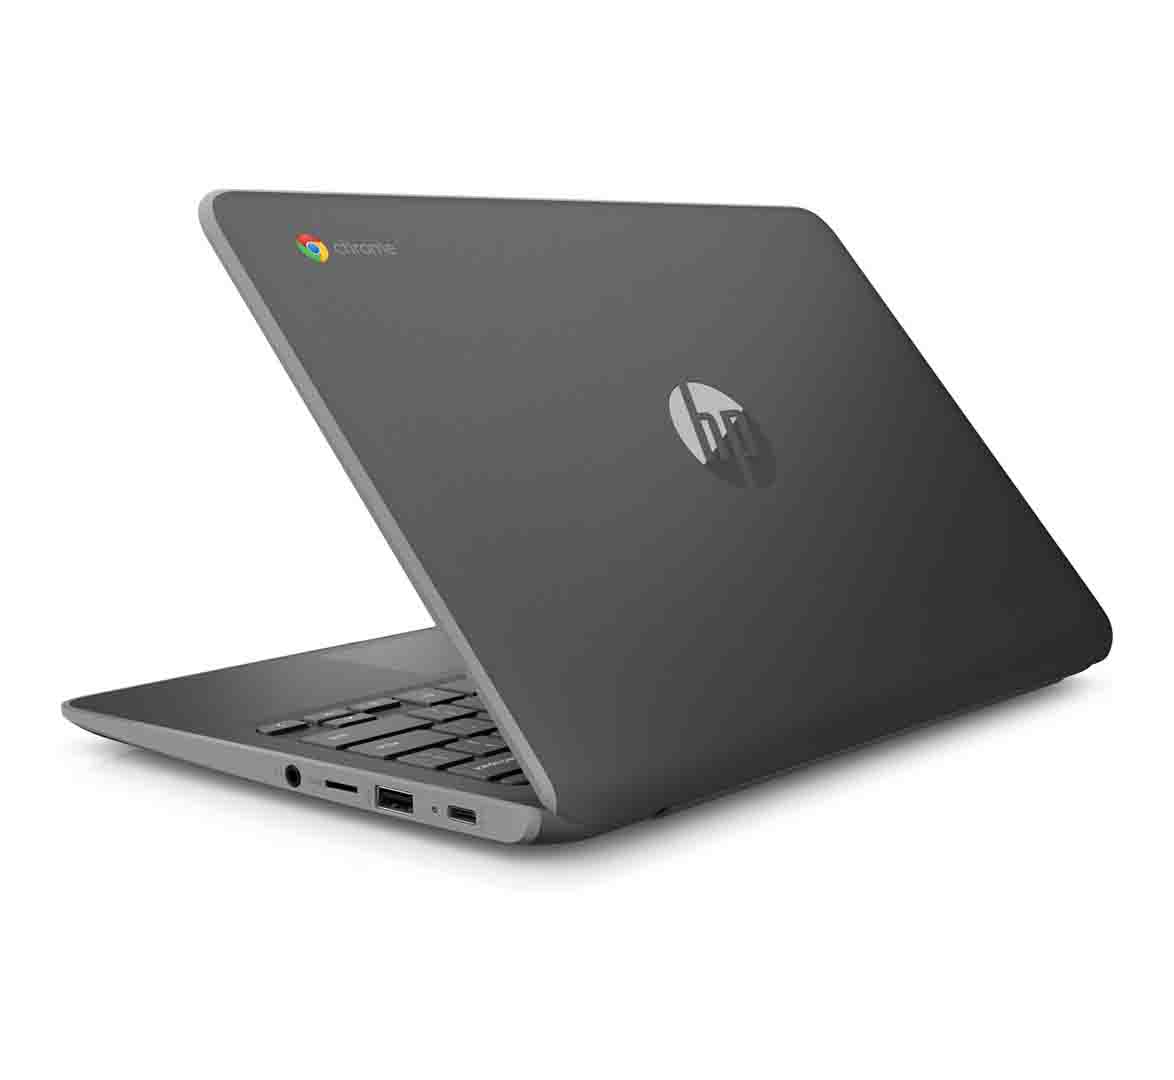 HP Chromebook 11 G7 EE Business Laptop, Intel Celeron N Series CPU, 8GB RAM, 64GB SSD, 11.6 inch Display, Chrome OS, Refurbished Laptop